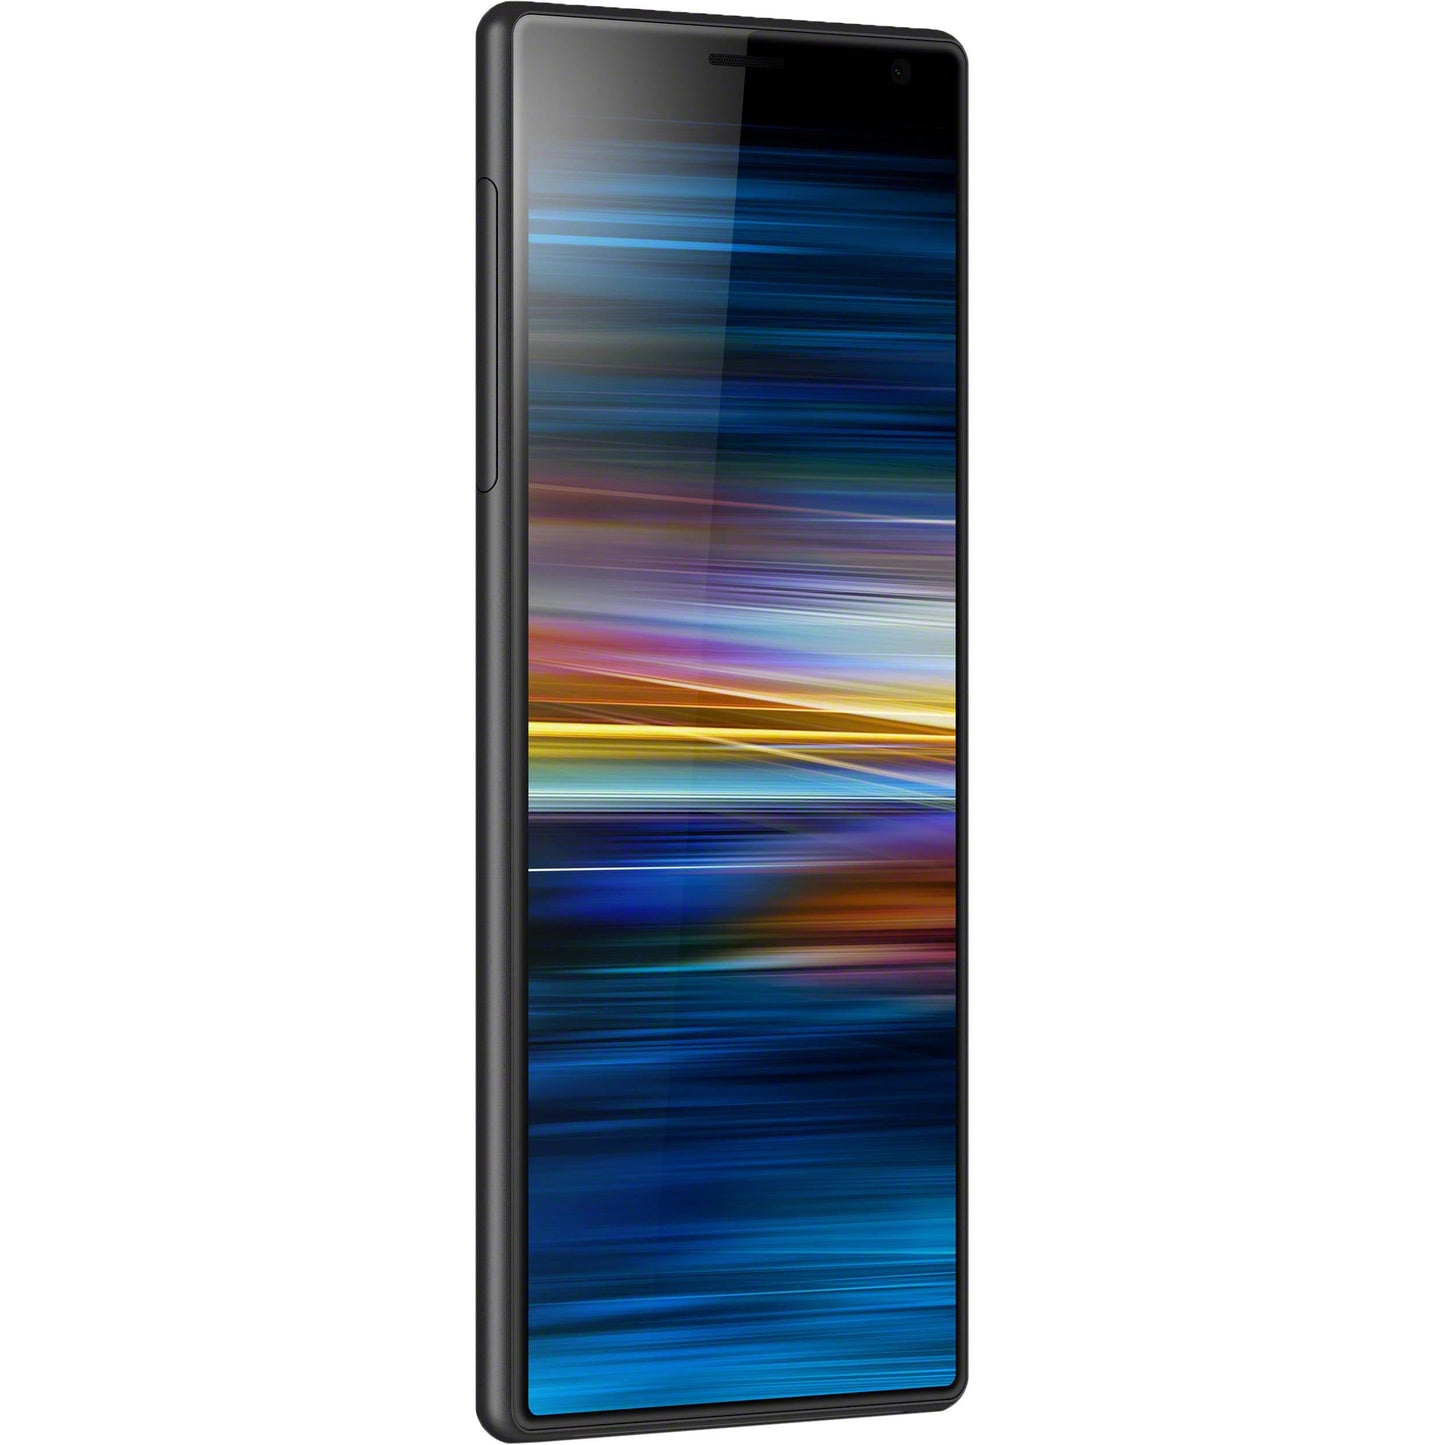 Sony Xperia 10 Plus - 64 GB - Black - Unlocked - GSM